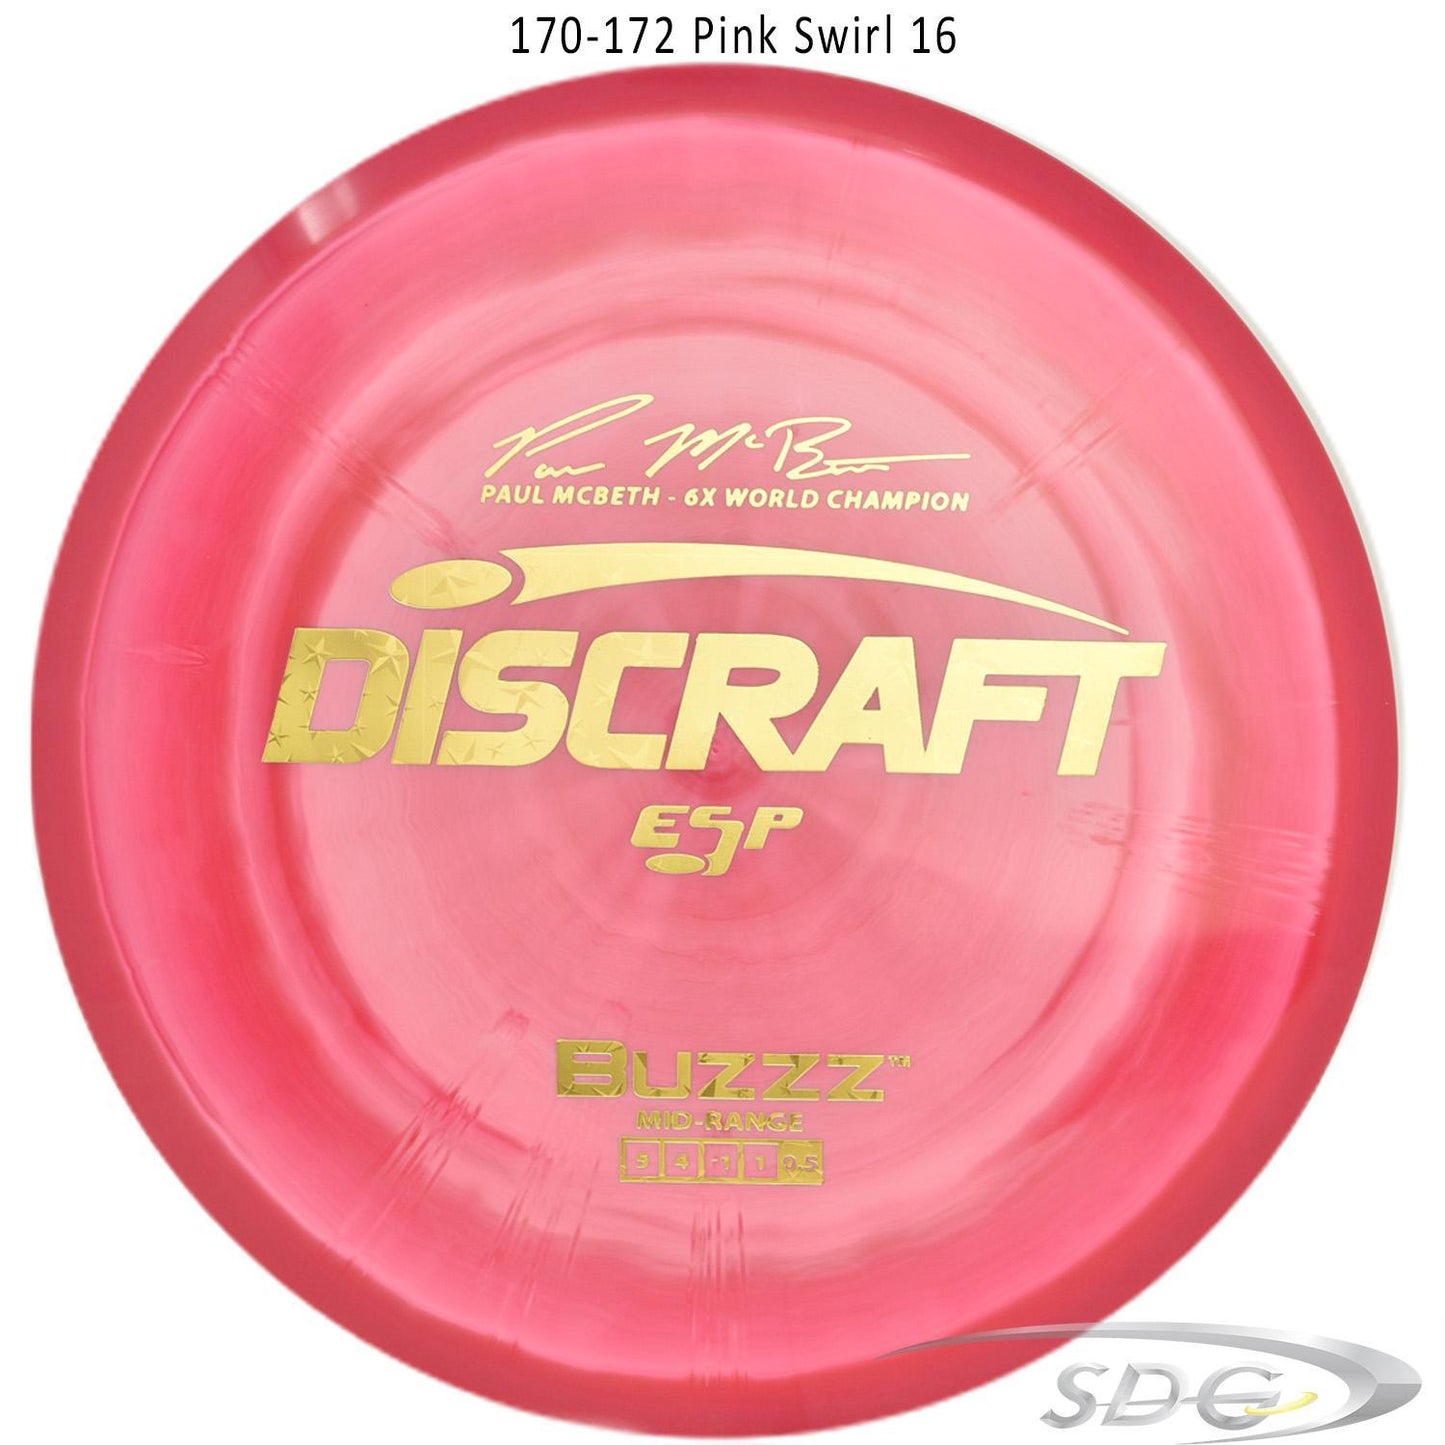 discraft-esp-buzzz-6x-paul-mcbeth-signature-series-disc-golf-mid-range-172-170-weights 170-172 Pink Swirl 16 